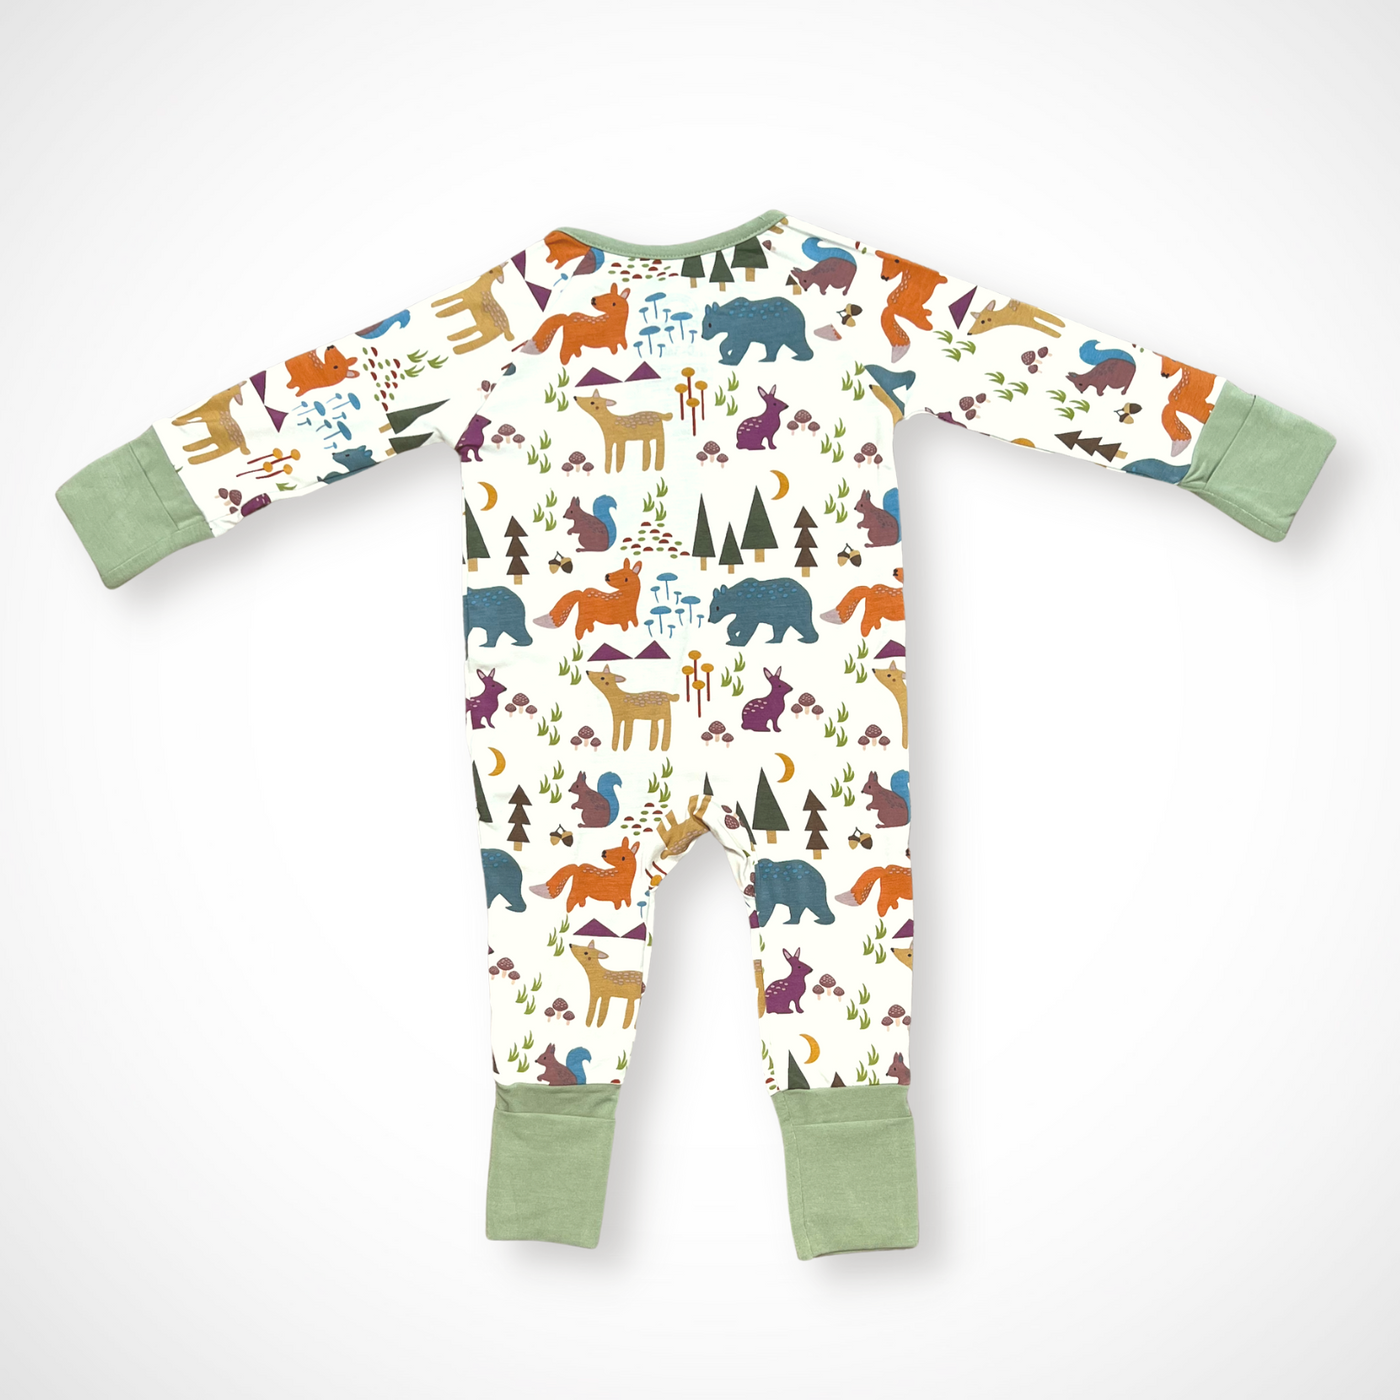 Unique sustainable baby sleepwear